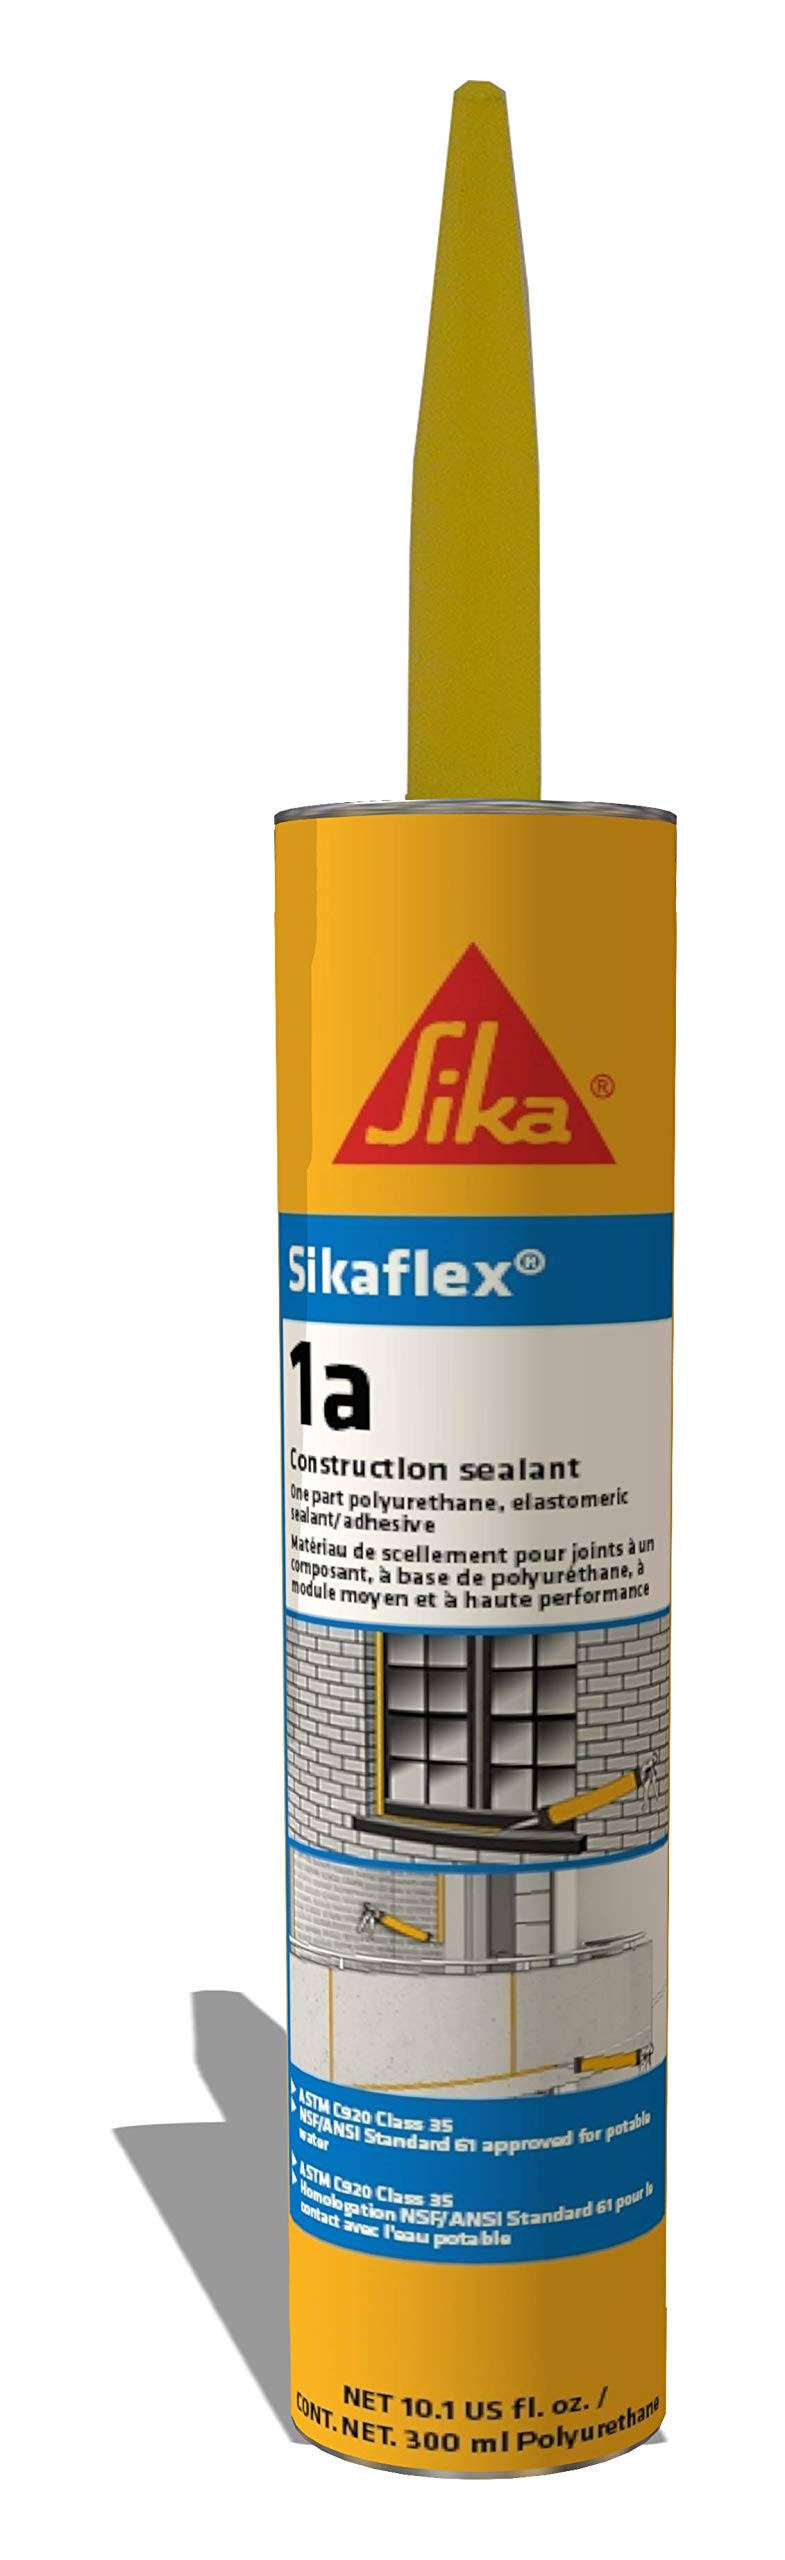 Sikaflex 1A Polyurethane Premium Grade High Performance Elastomeric Sealant - White, 10.3 fl oz